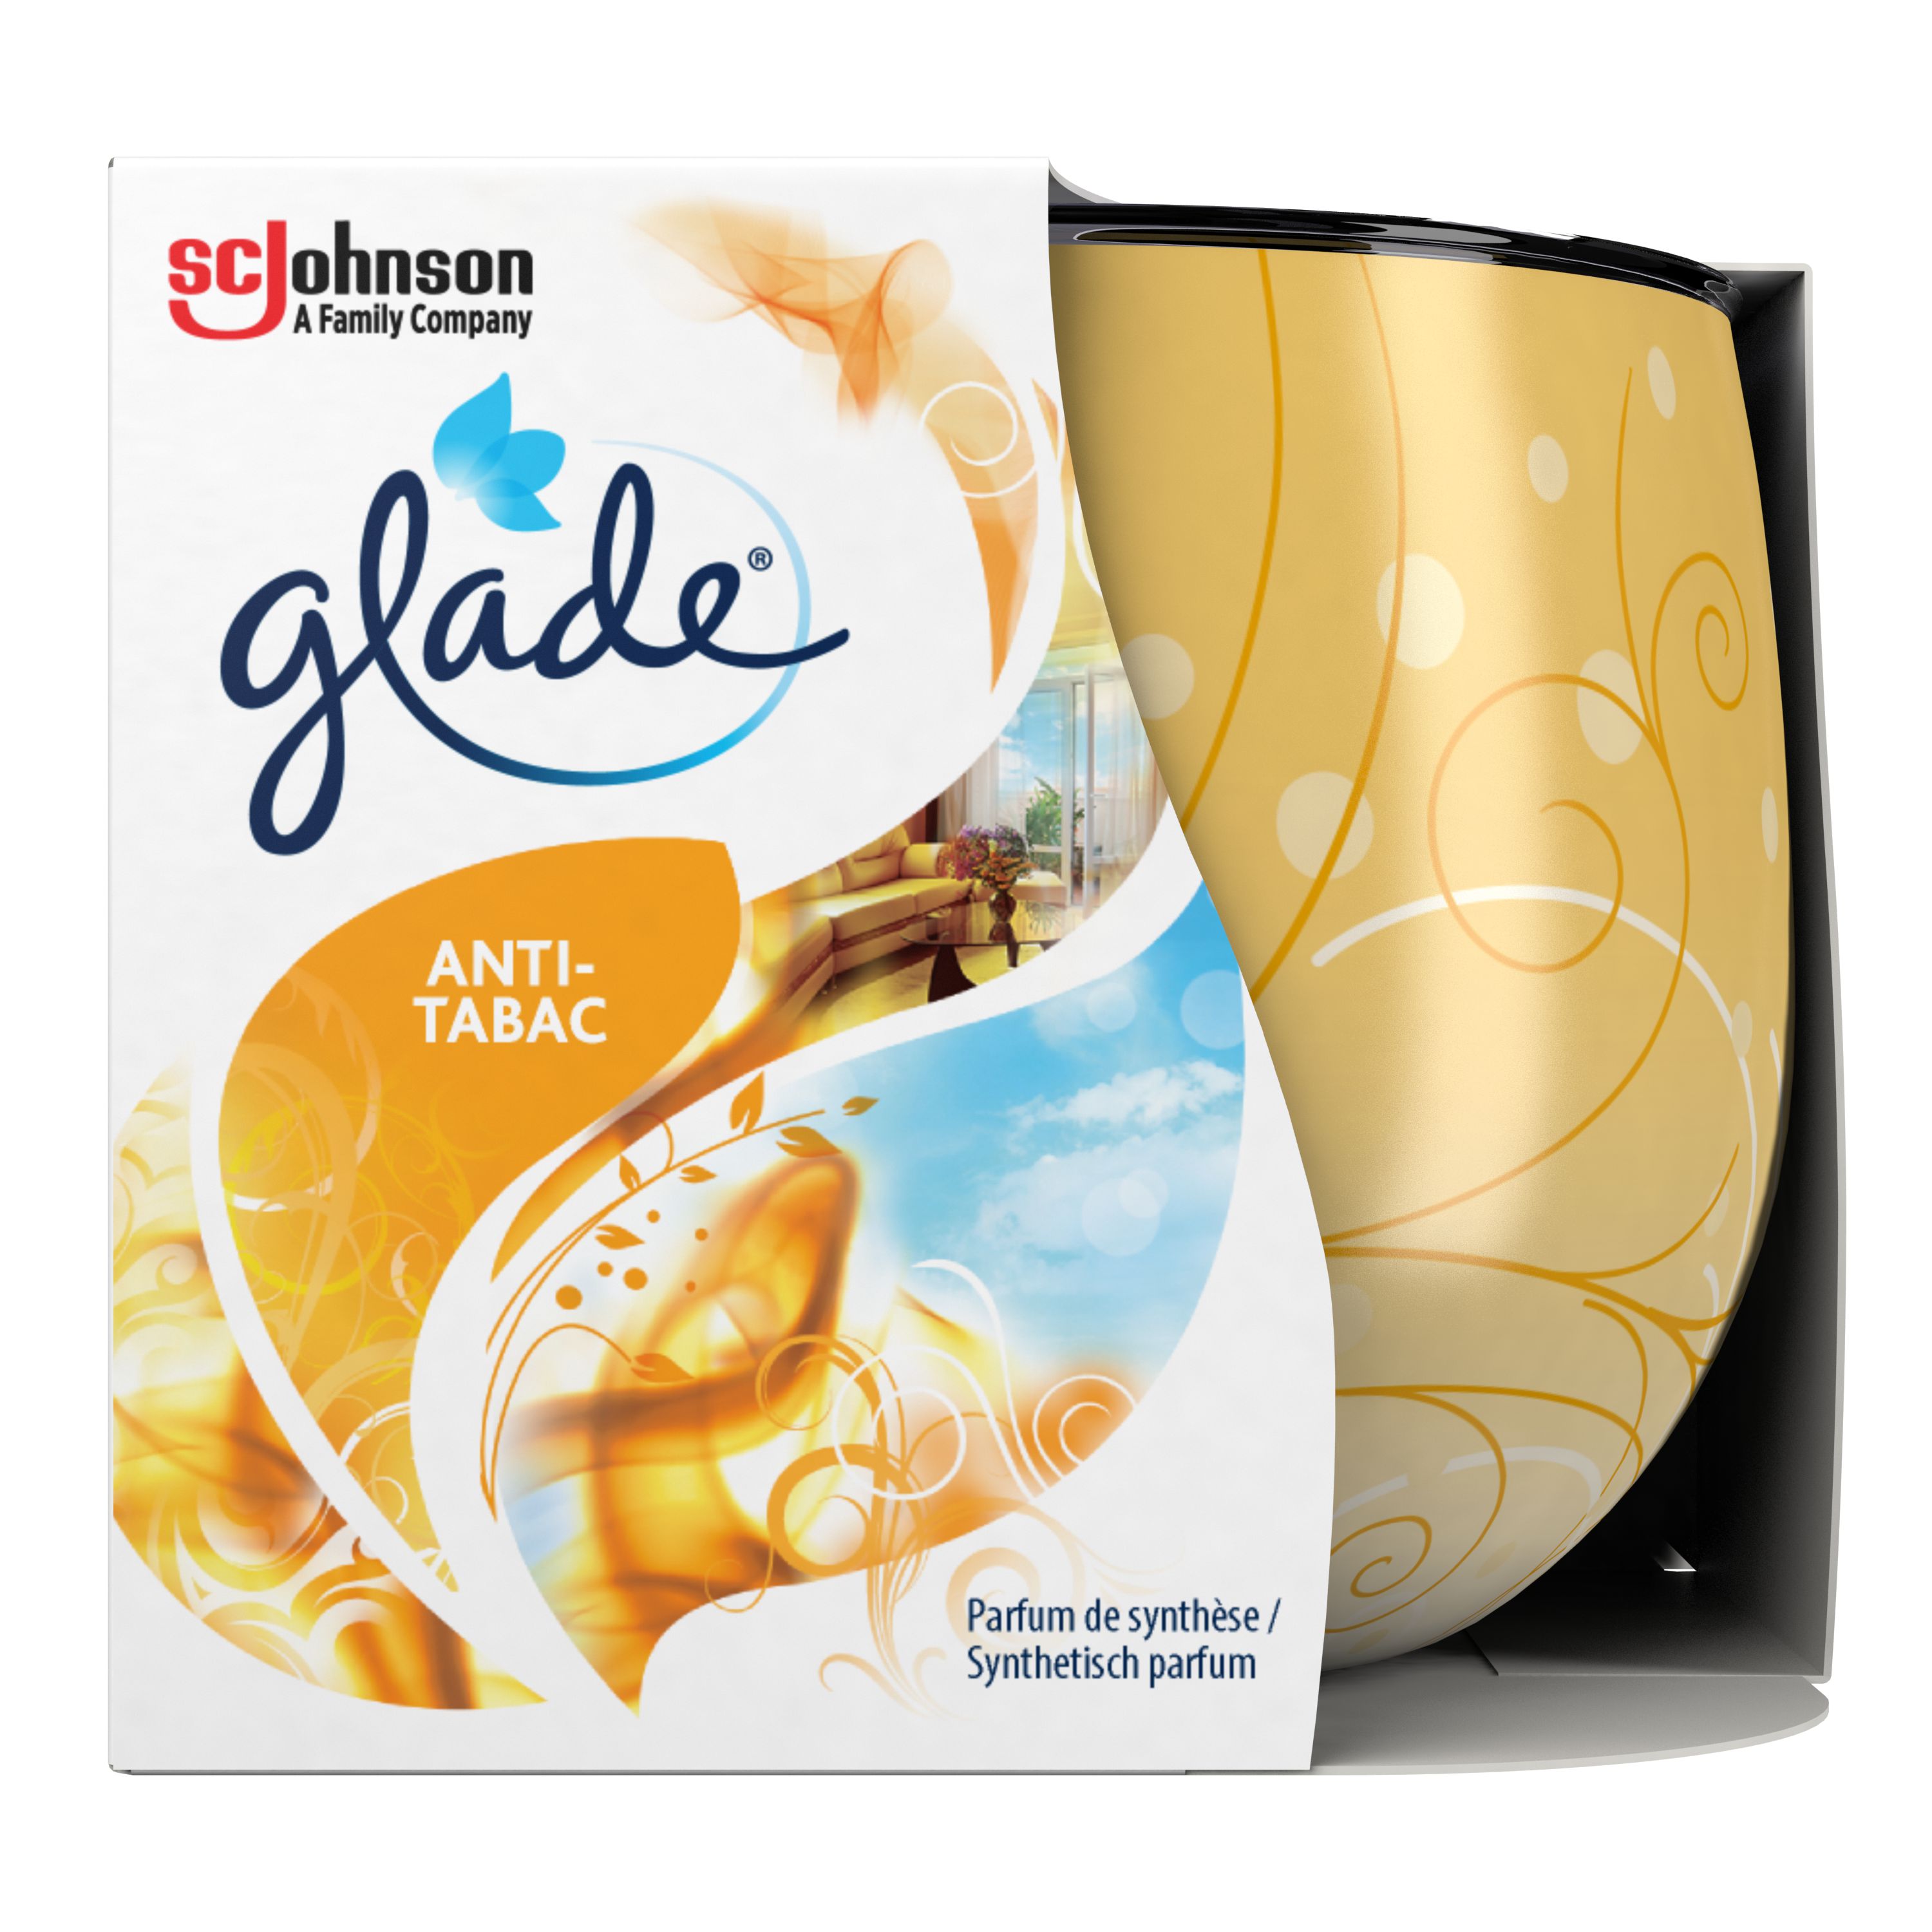 Glade® Duftkerze mit Dekorfolie Anti-Tabac 